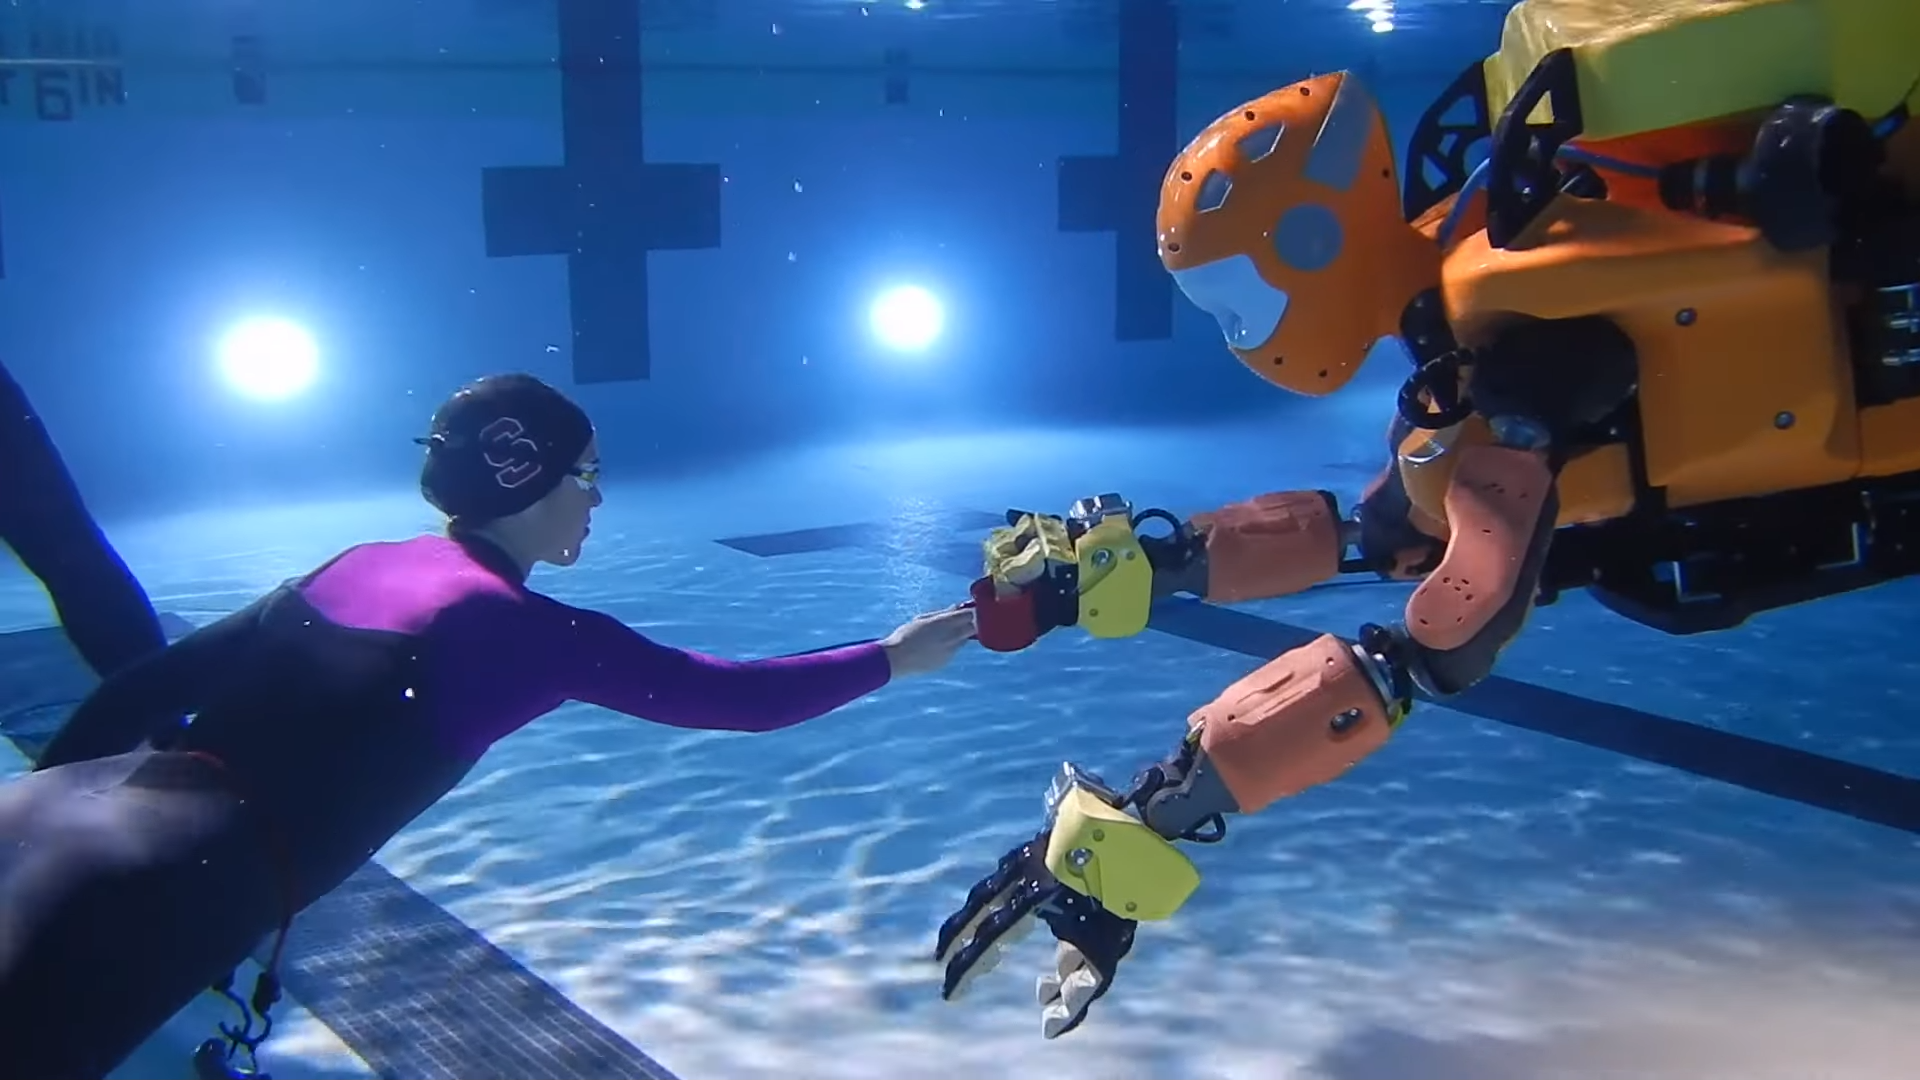 OceanOneK – humanoidalny robot-nurek Uniwersytetu Stanforda